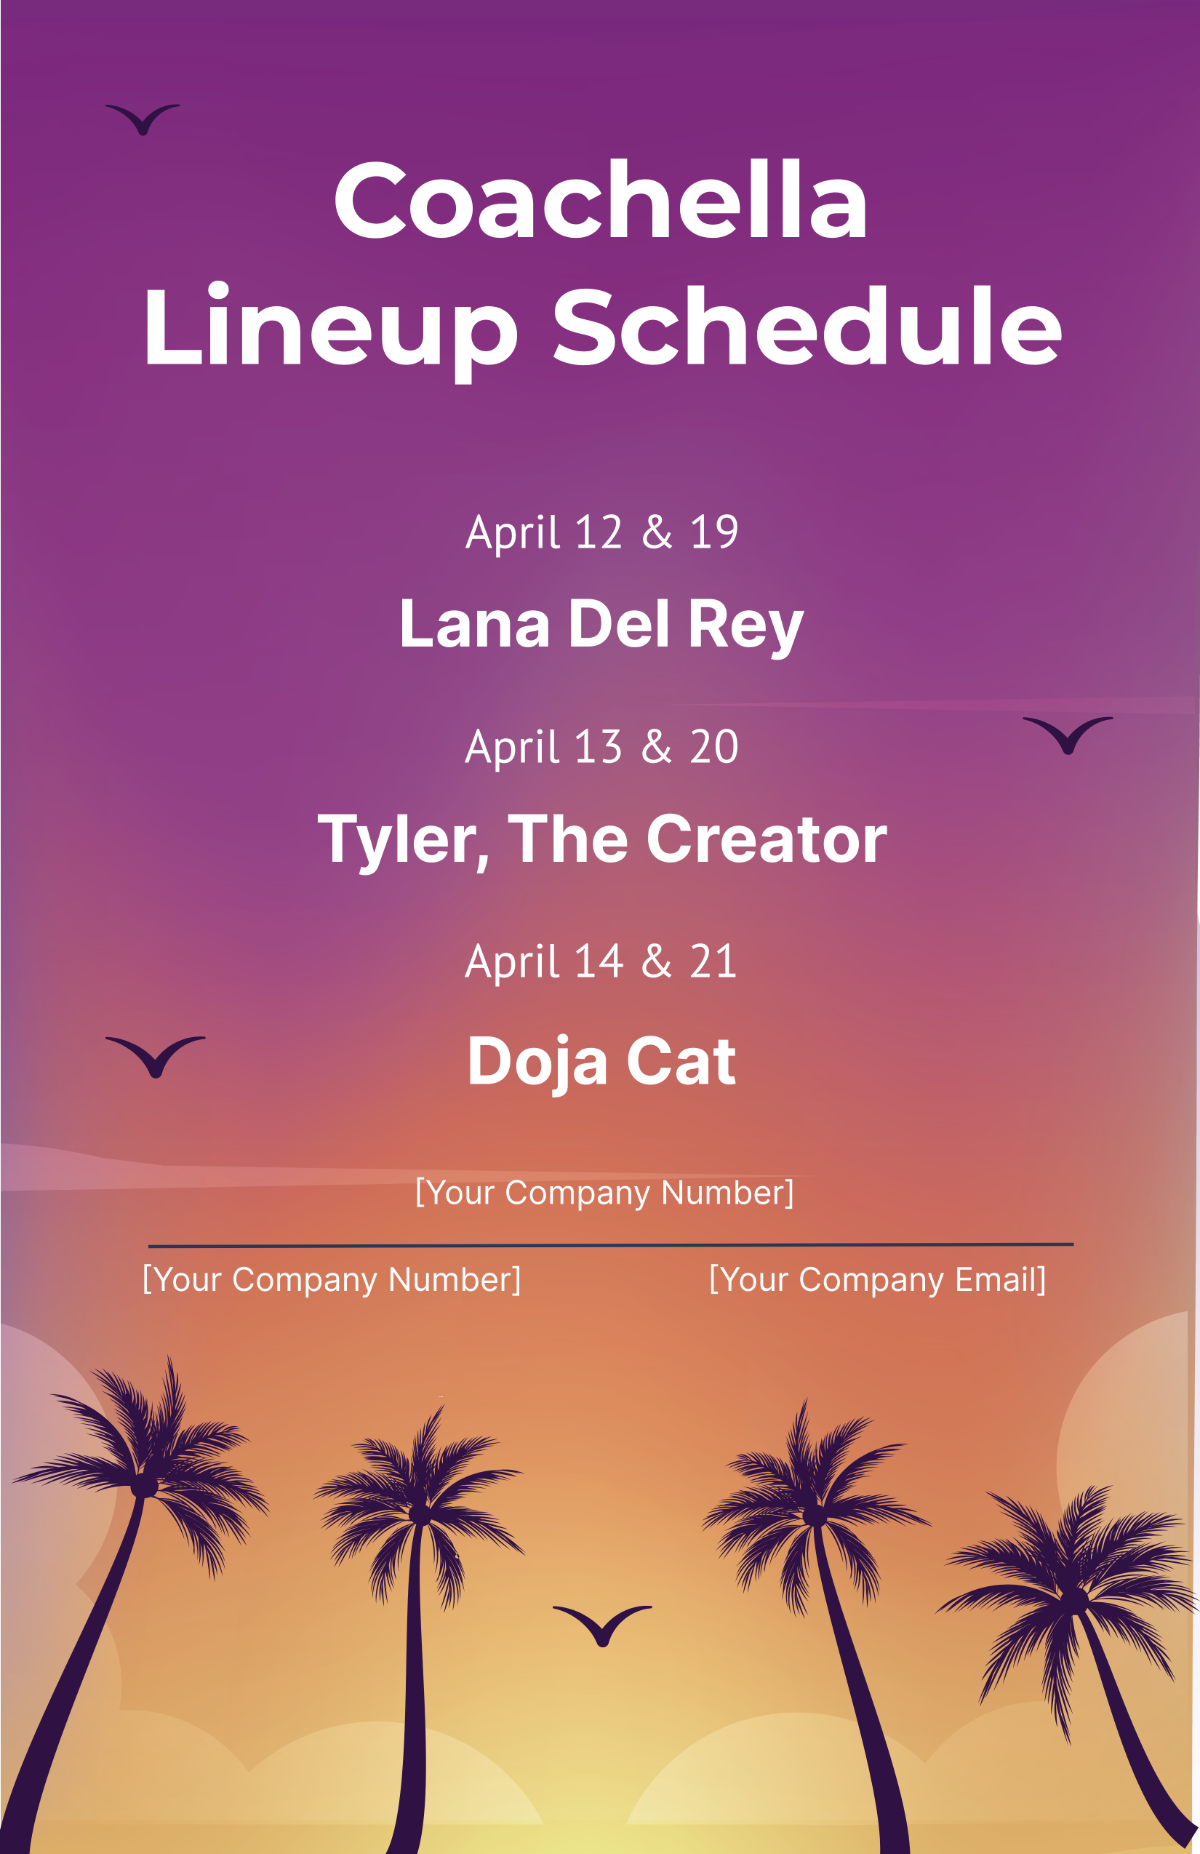 Coachella Lineup Schedule